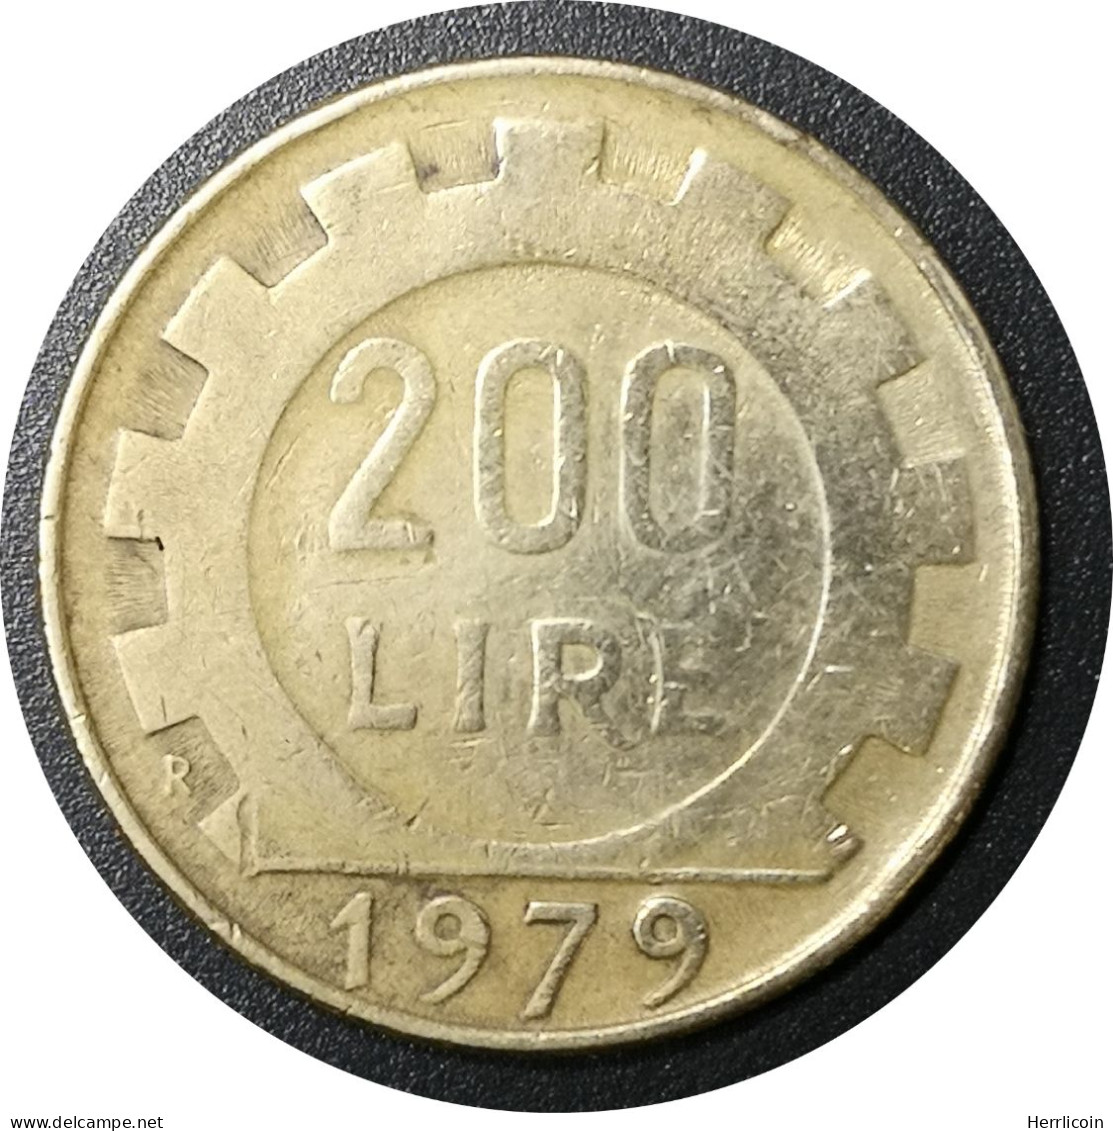 Monnaie Italie - 1979 - 200 Lire - 200 Liras